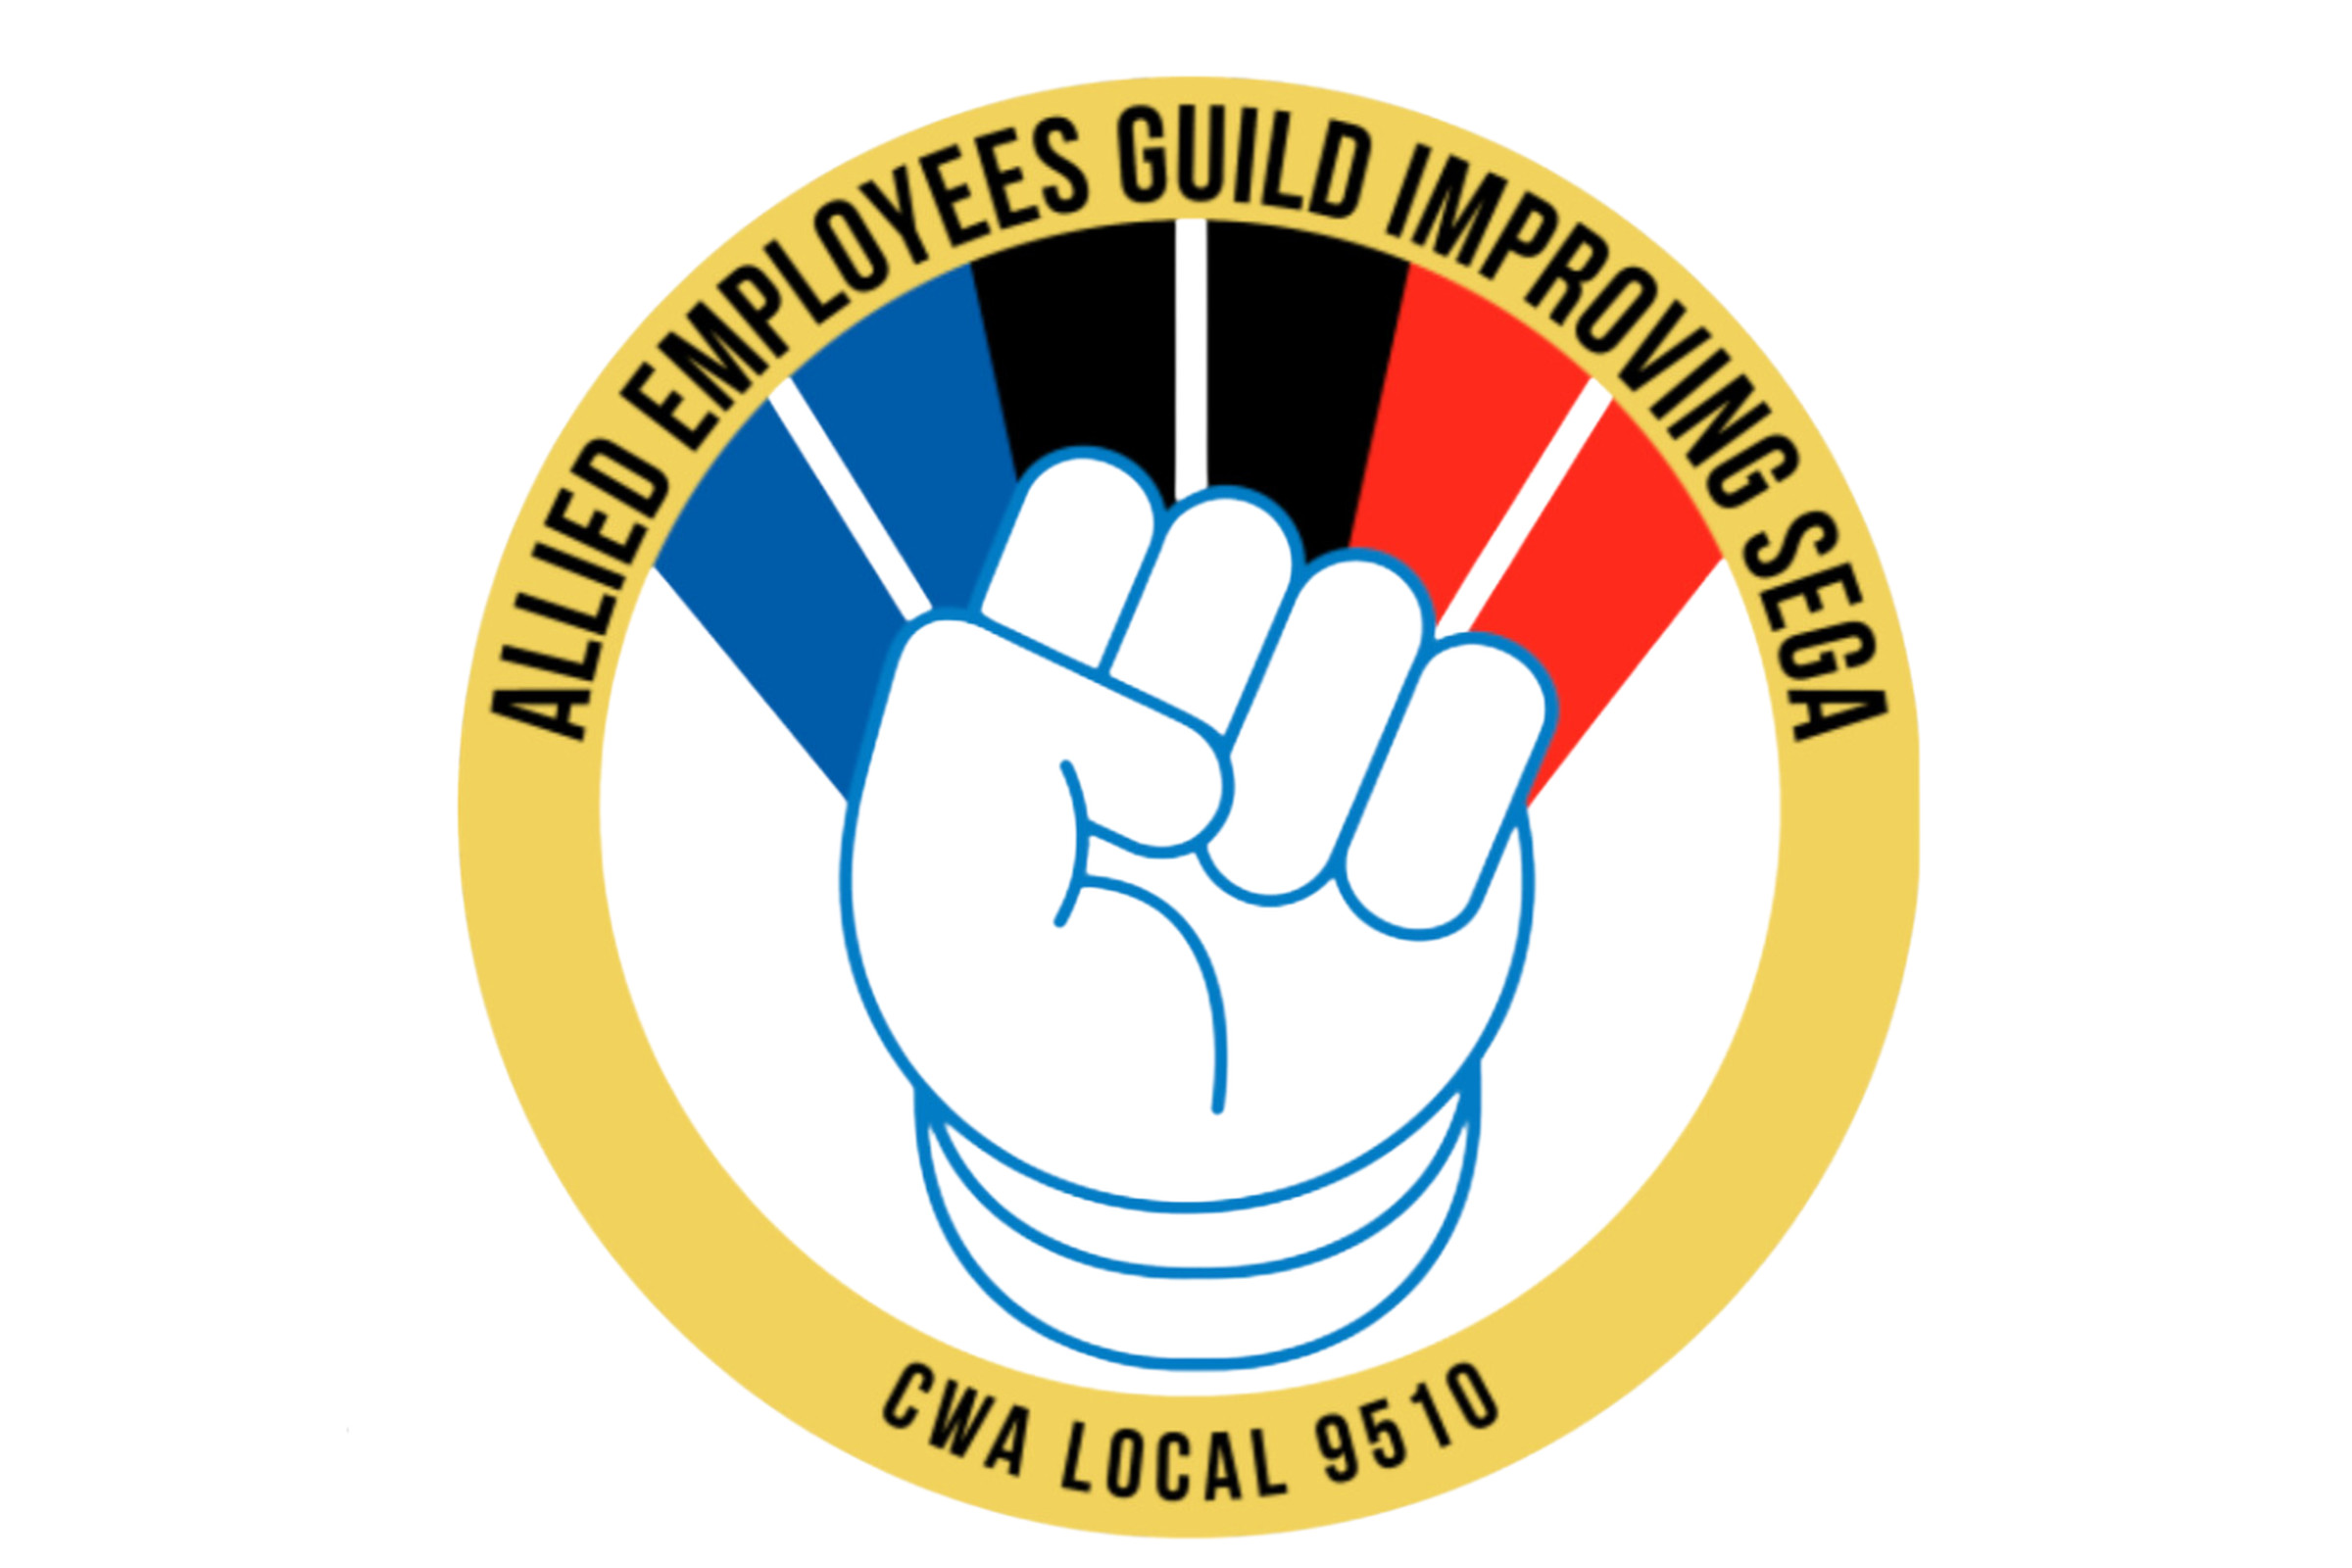 The logo for the Allied Employees Guild Improving Sega, or AEGIS, union